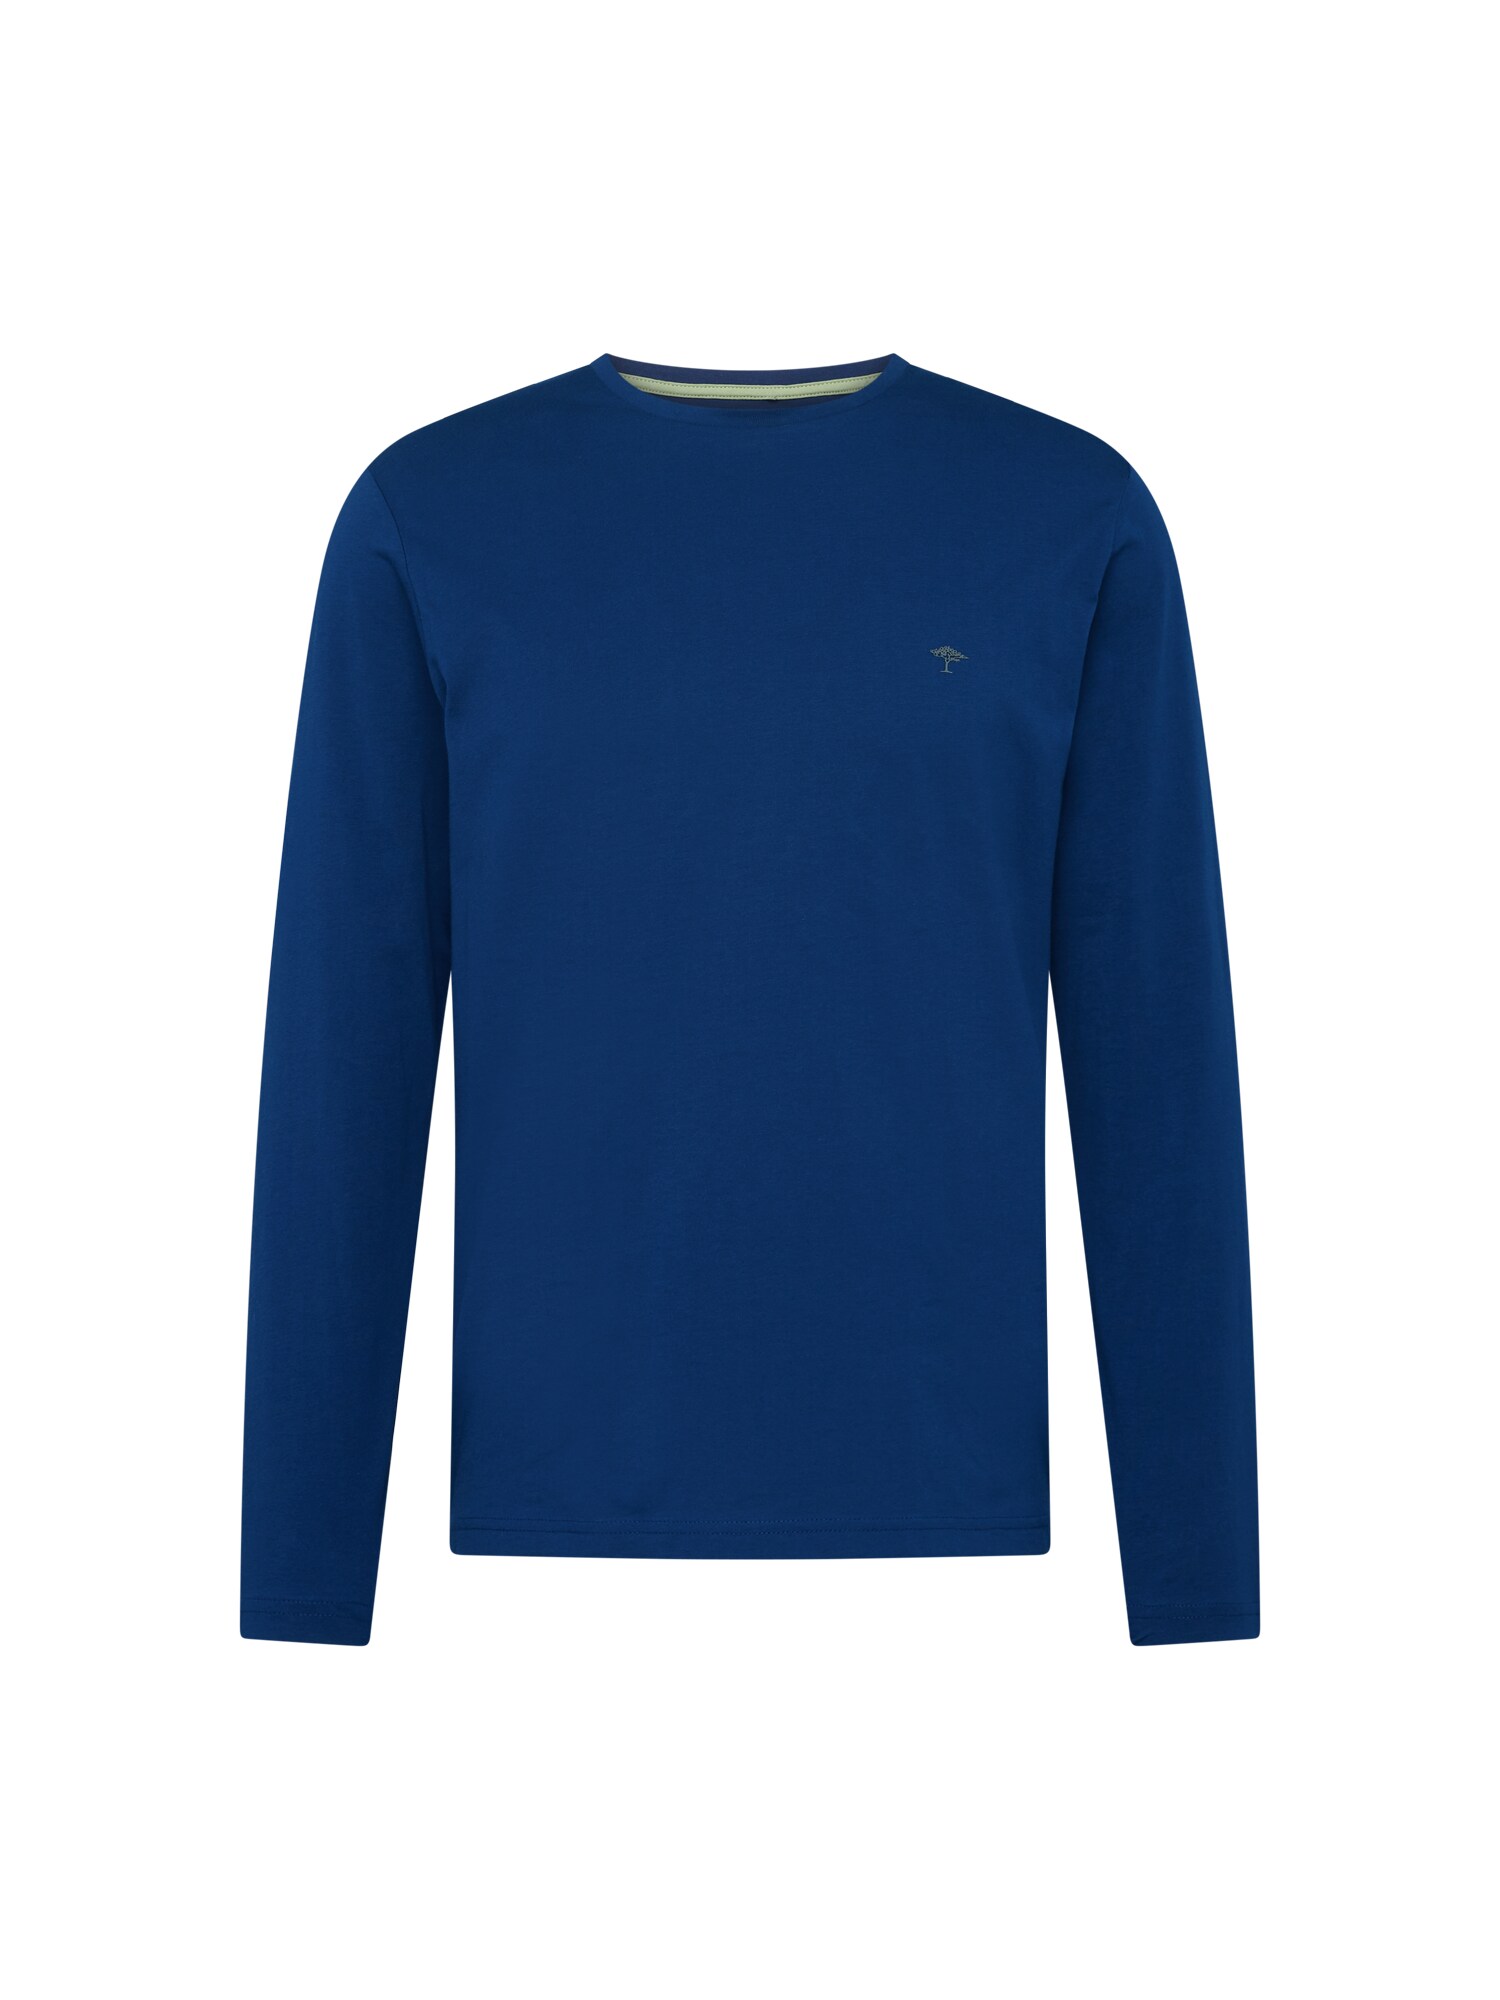 FYNCH-HATTON Marškinėliai sodri mėlyna („karališka“) / antracito spalva